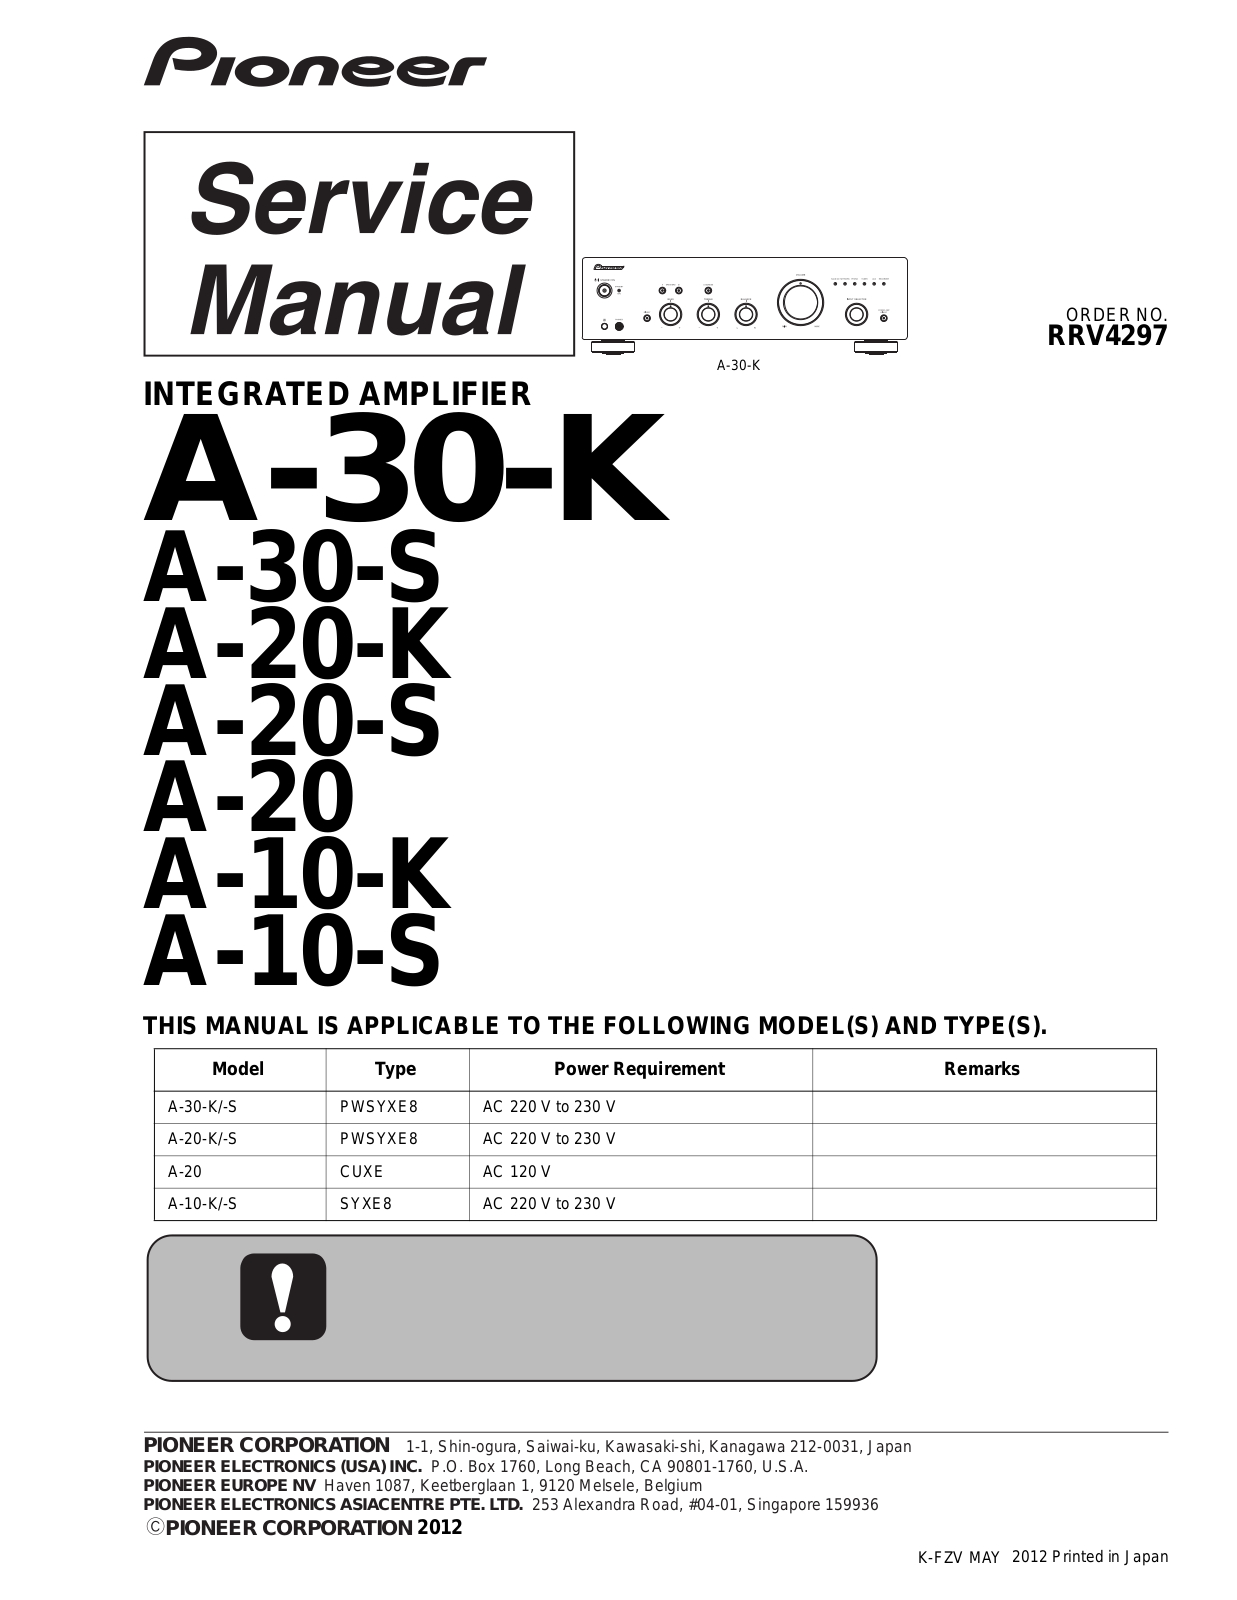 Pioneer a-10-k, 20-k, 30-k Service Manual